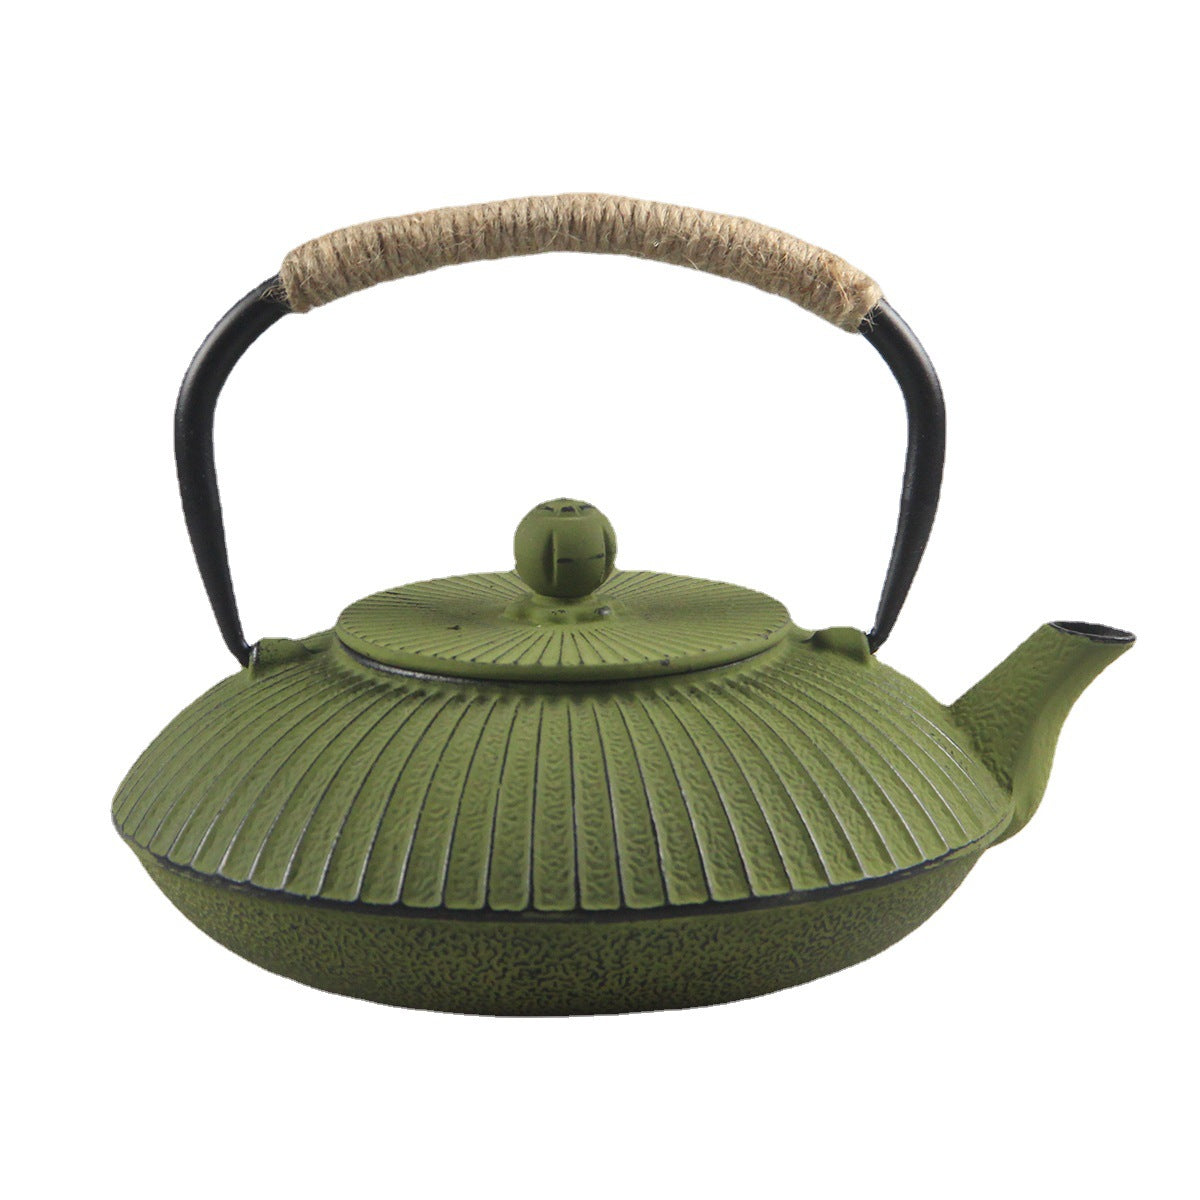 Umbrella Teapot Cast Iron Teapot With Strainer